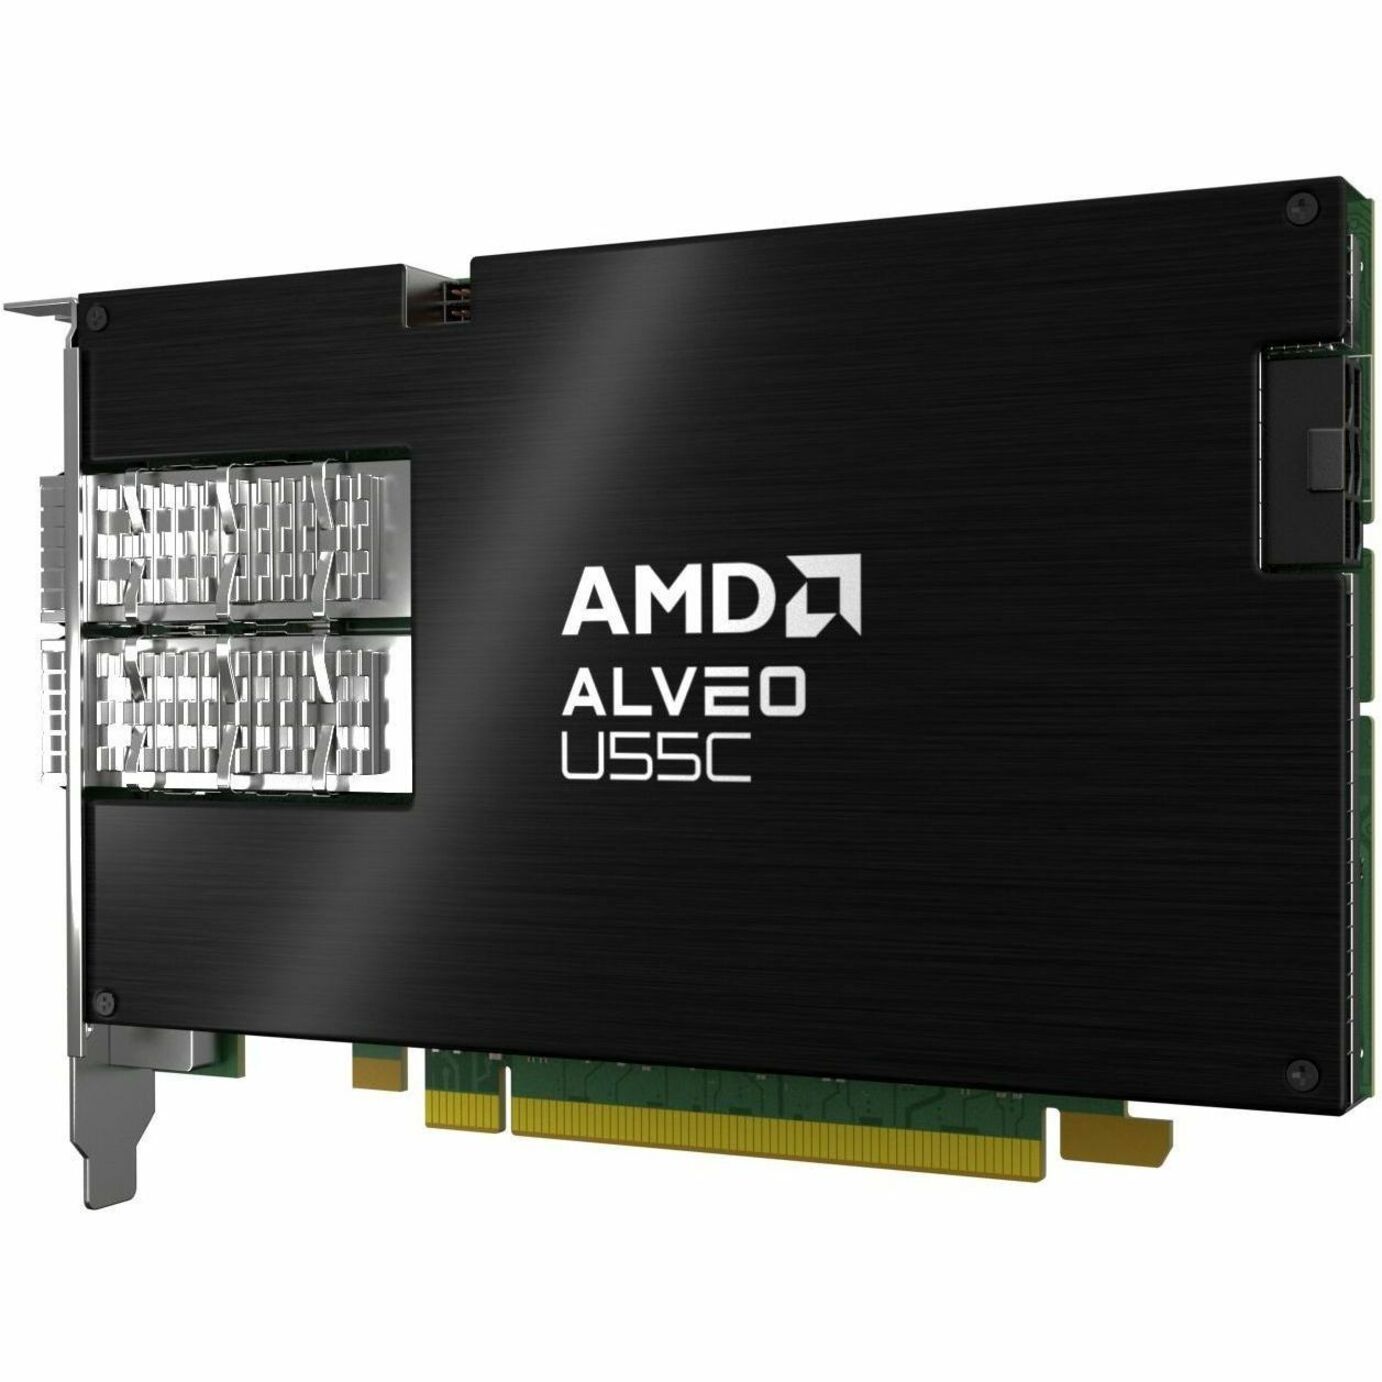 AMD Alveo U55C High Performance Compute Card (A-U55C-P00G-PQ-G)